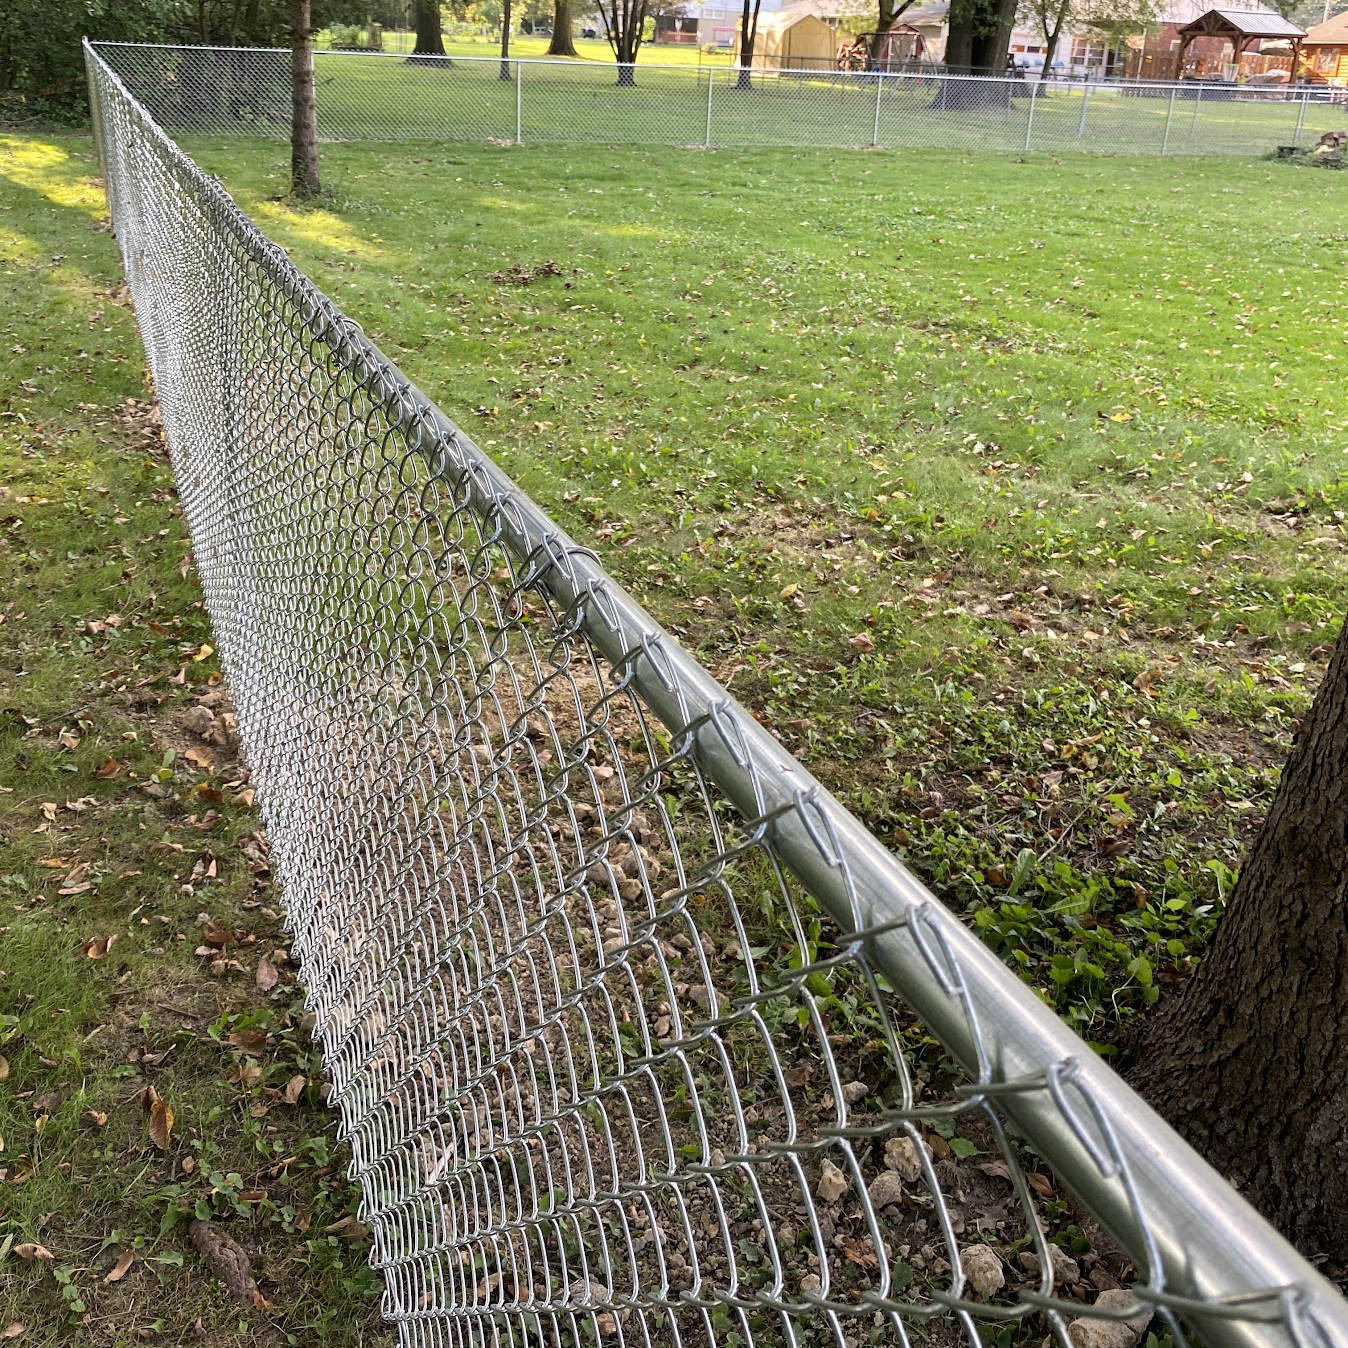 buy chain link fencing online